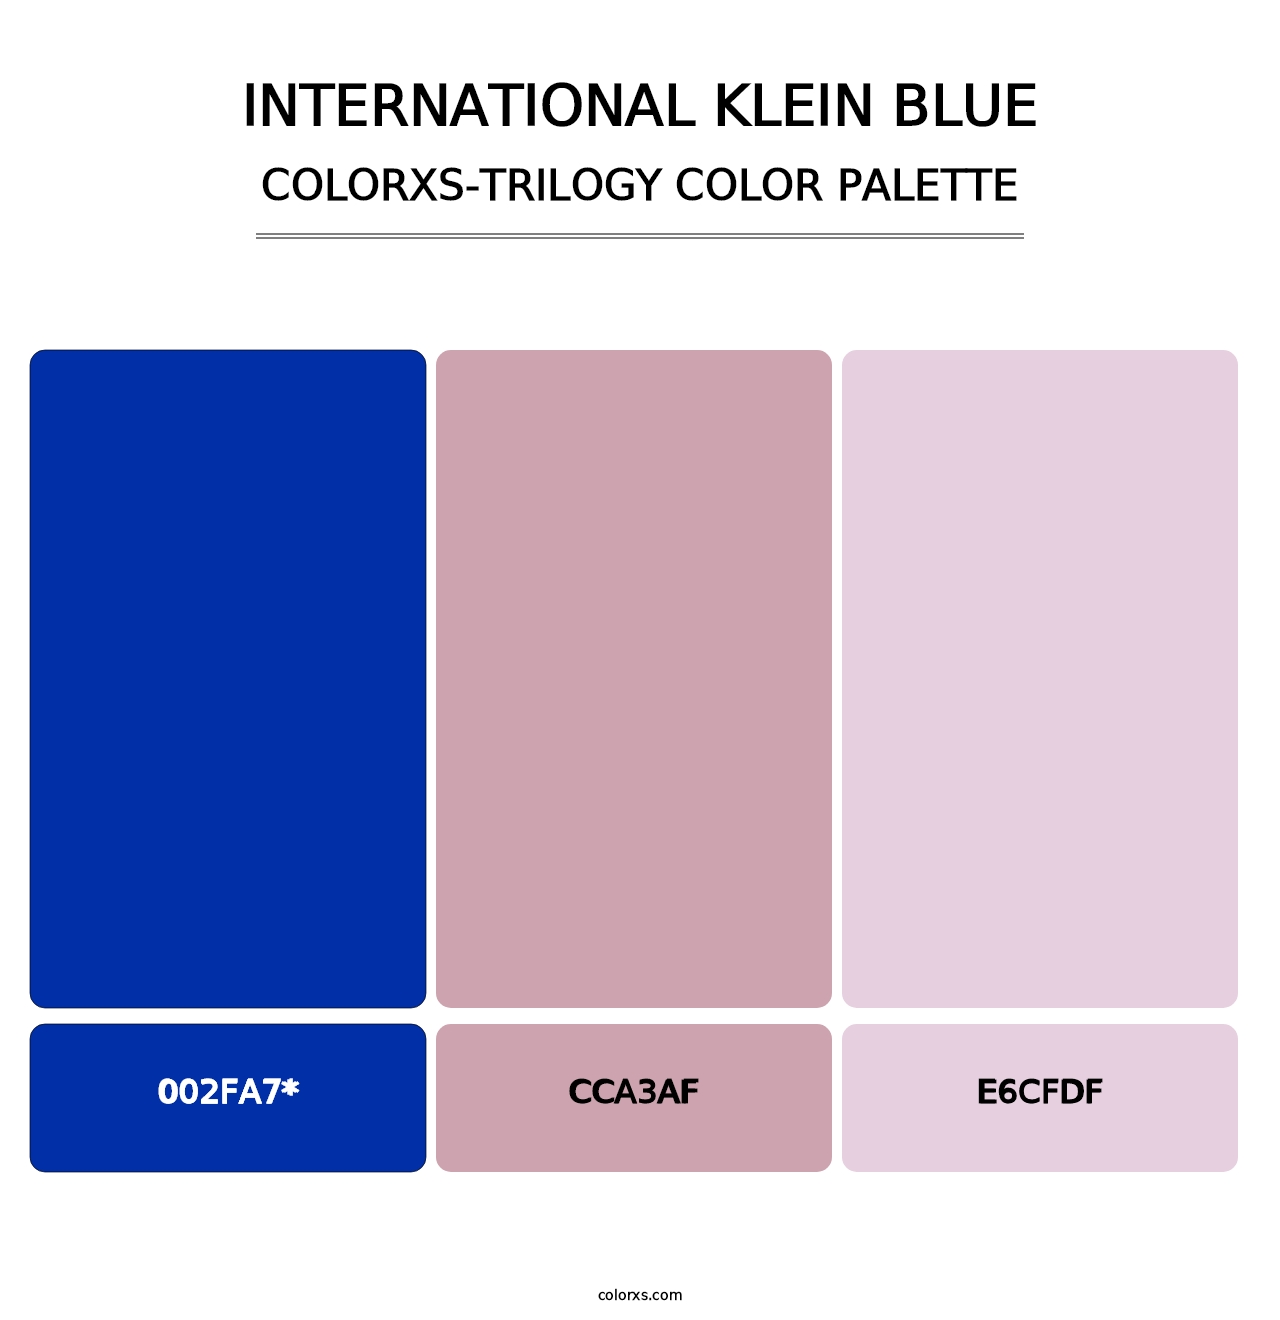 International Klein Blue - Colorxs Trilogy Palette